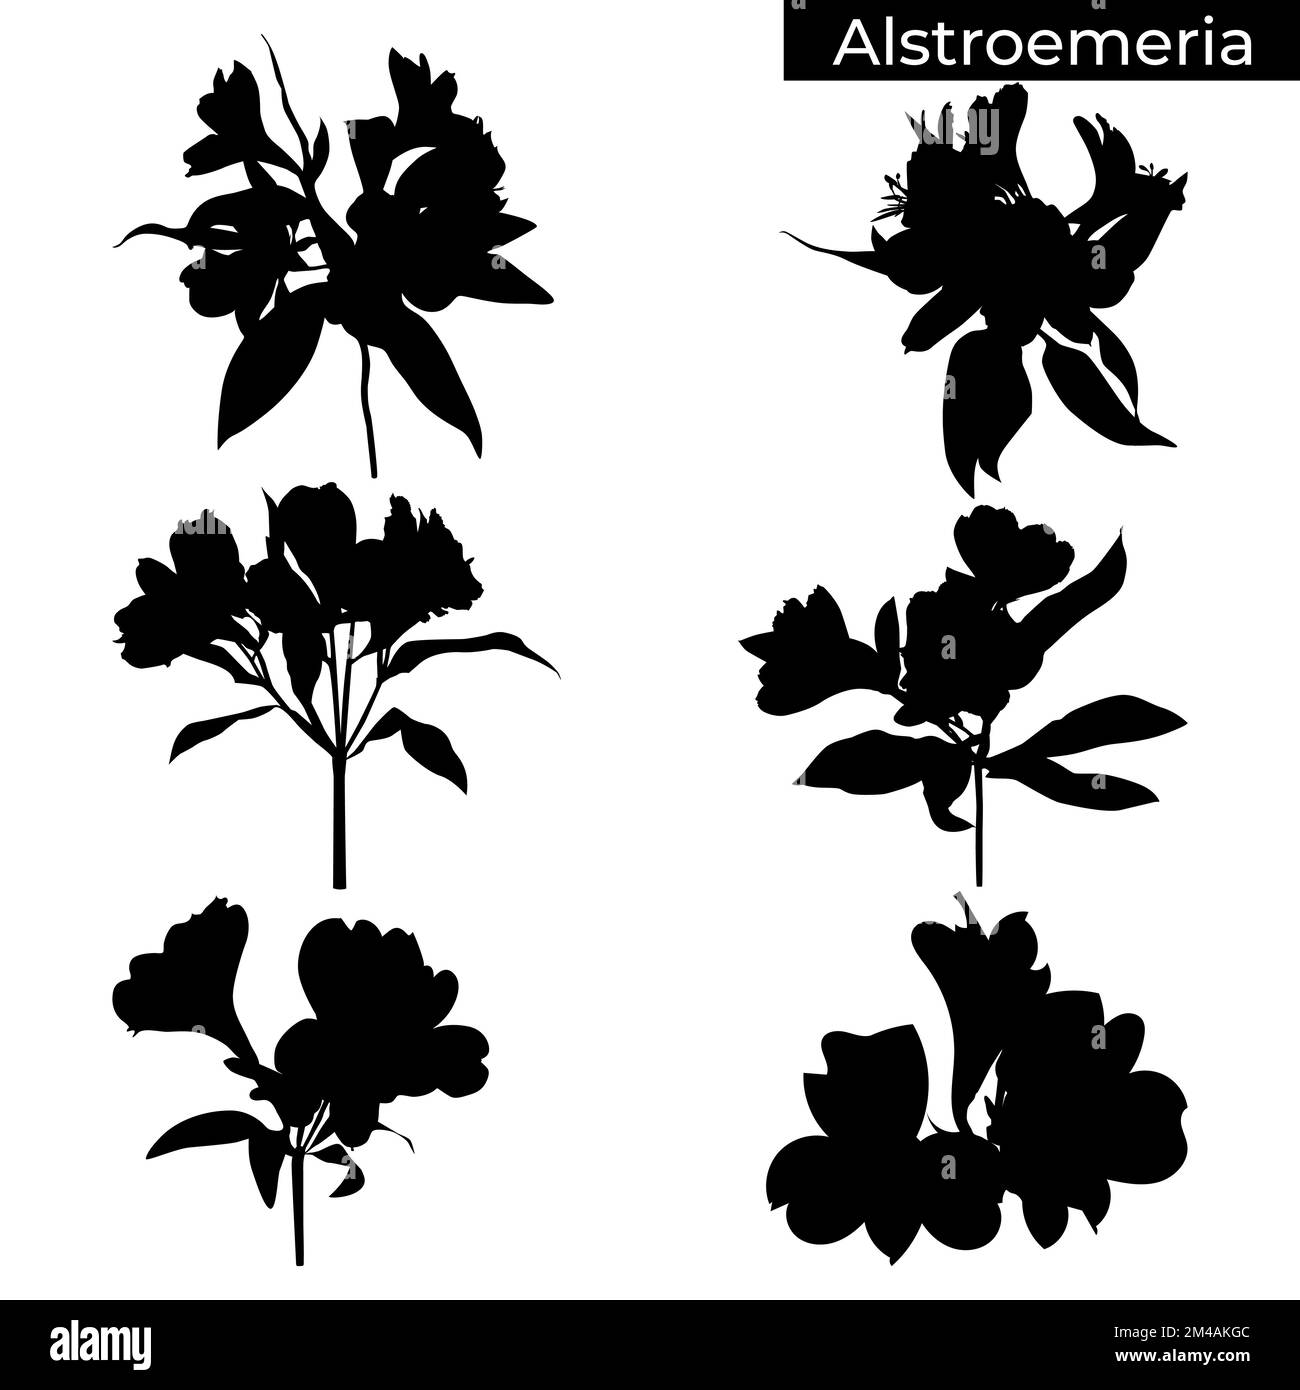 Alstroemeria Peruvian lily tropical flower black silhouettes vector illustration Stock Vector